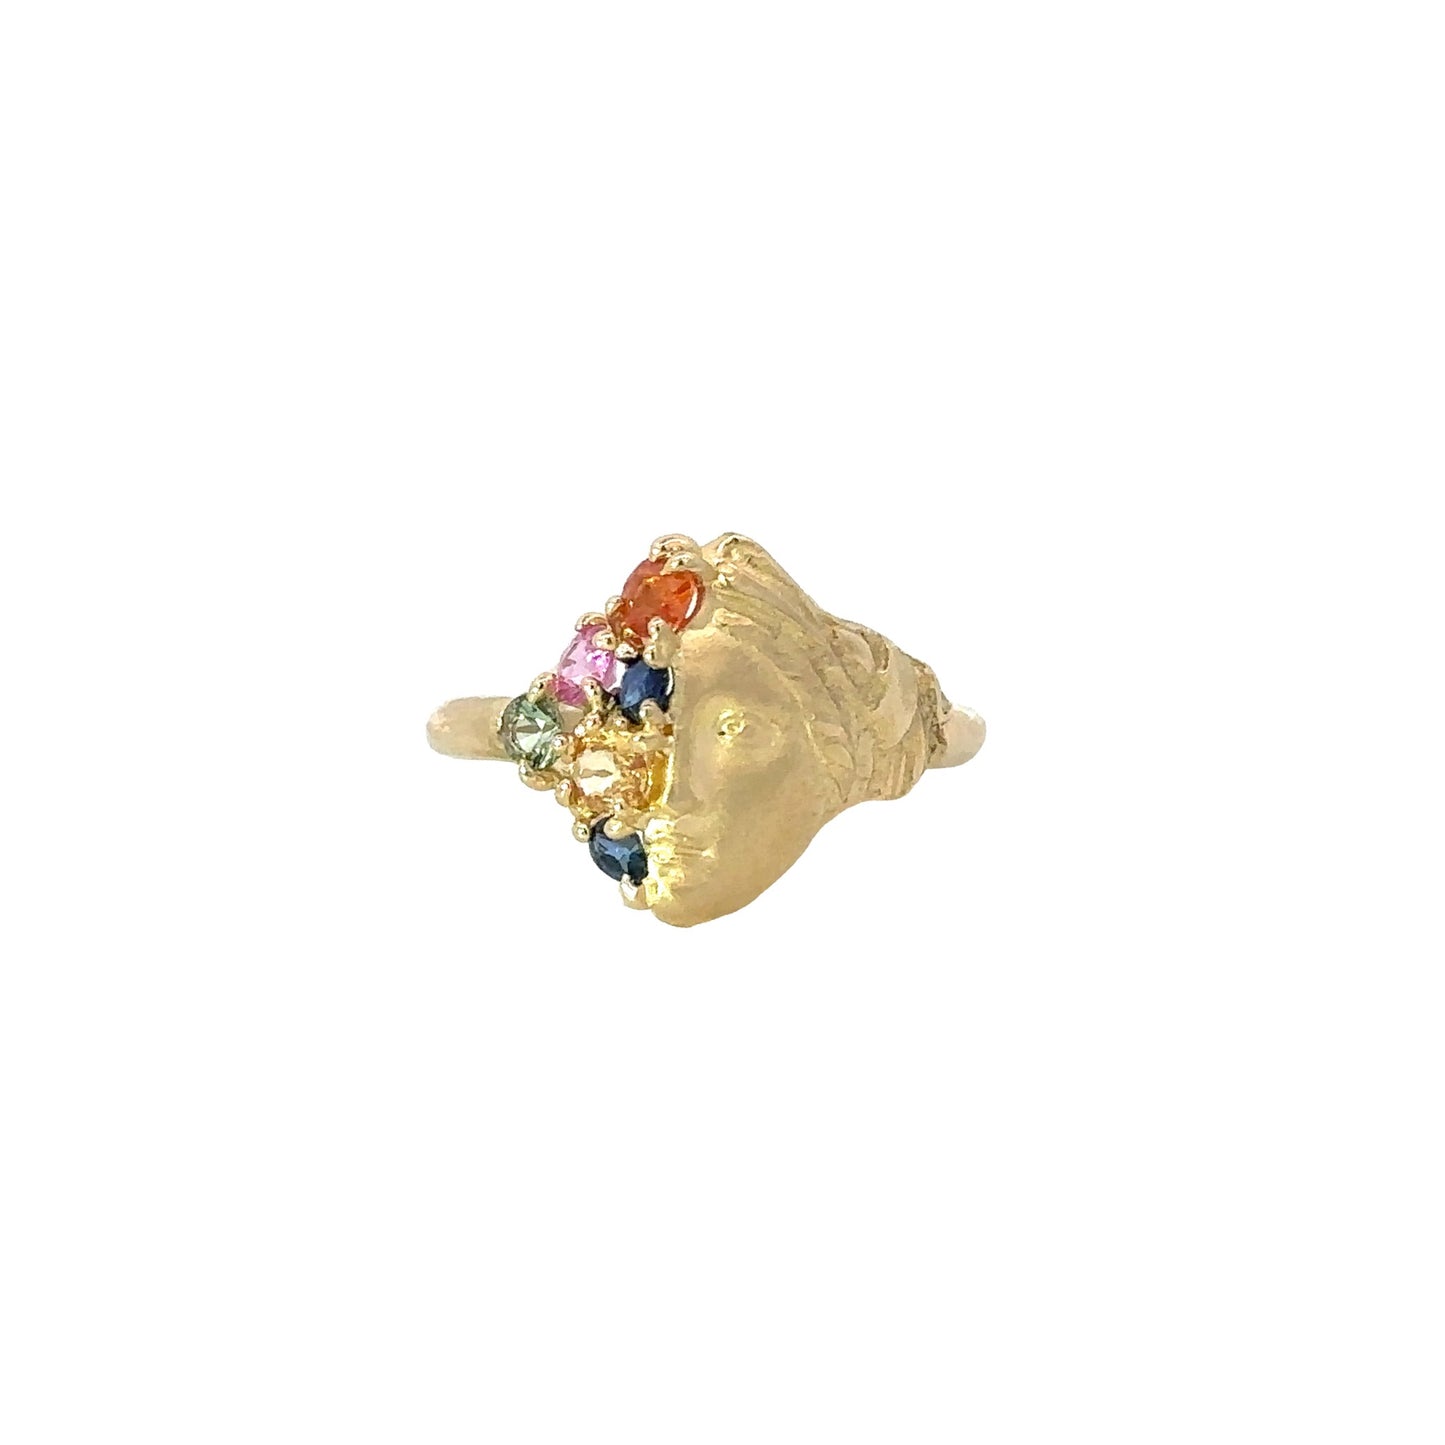 fragmented sybil ring - vibrant sapphire